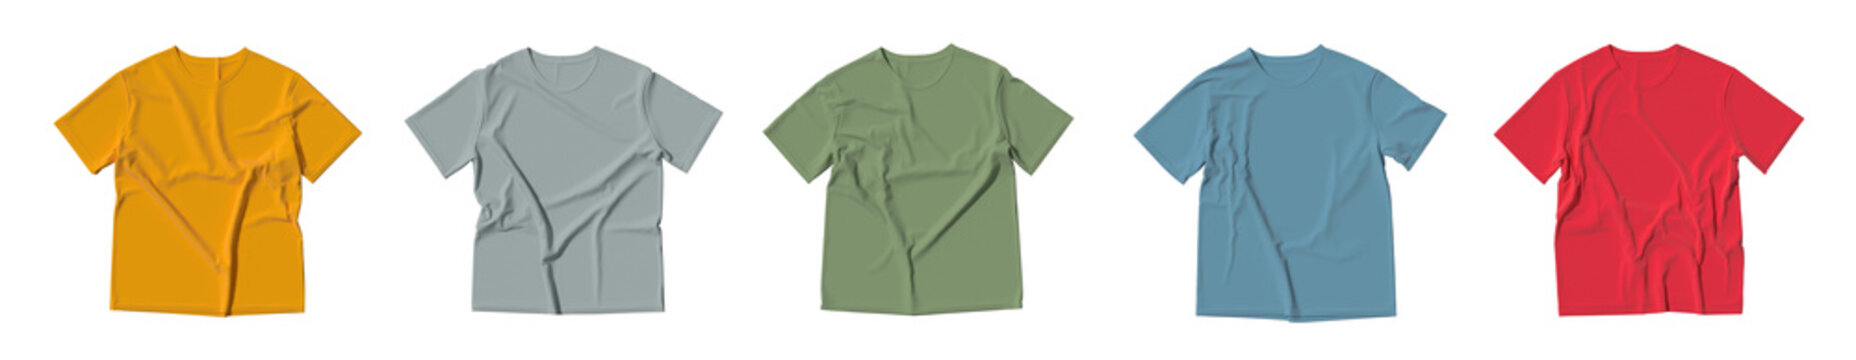 Short sleeves t-shirt mock ups. Unisex colored t-shirt mock ups.